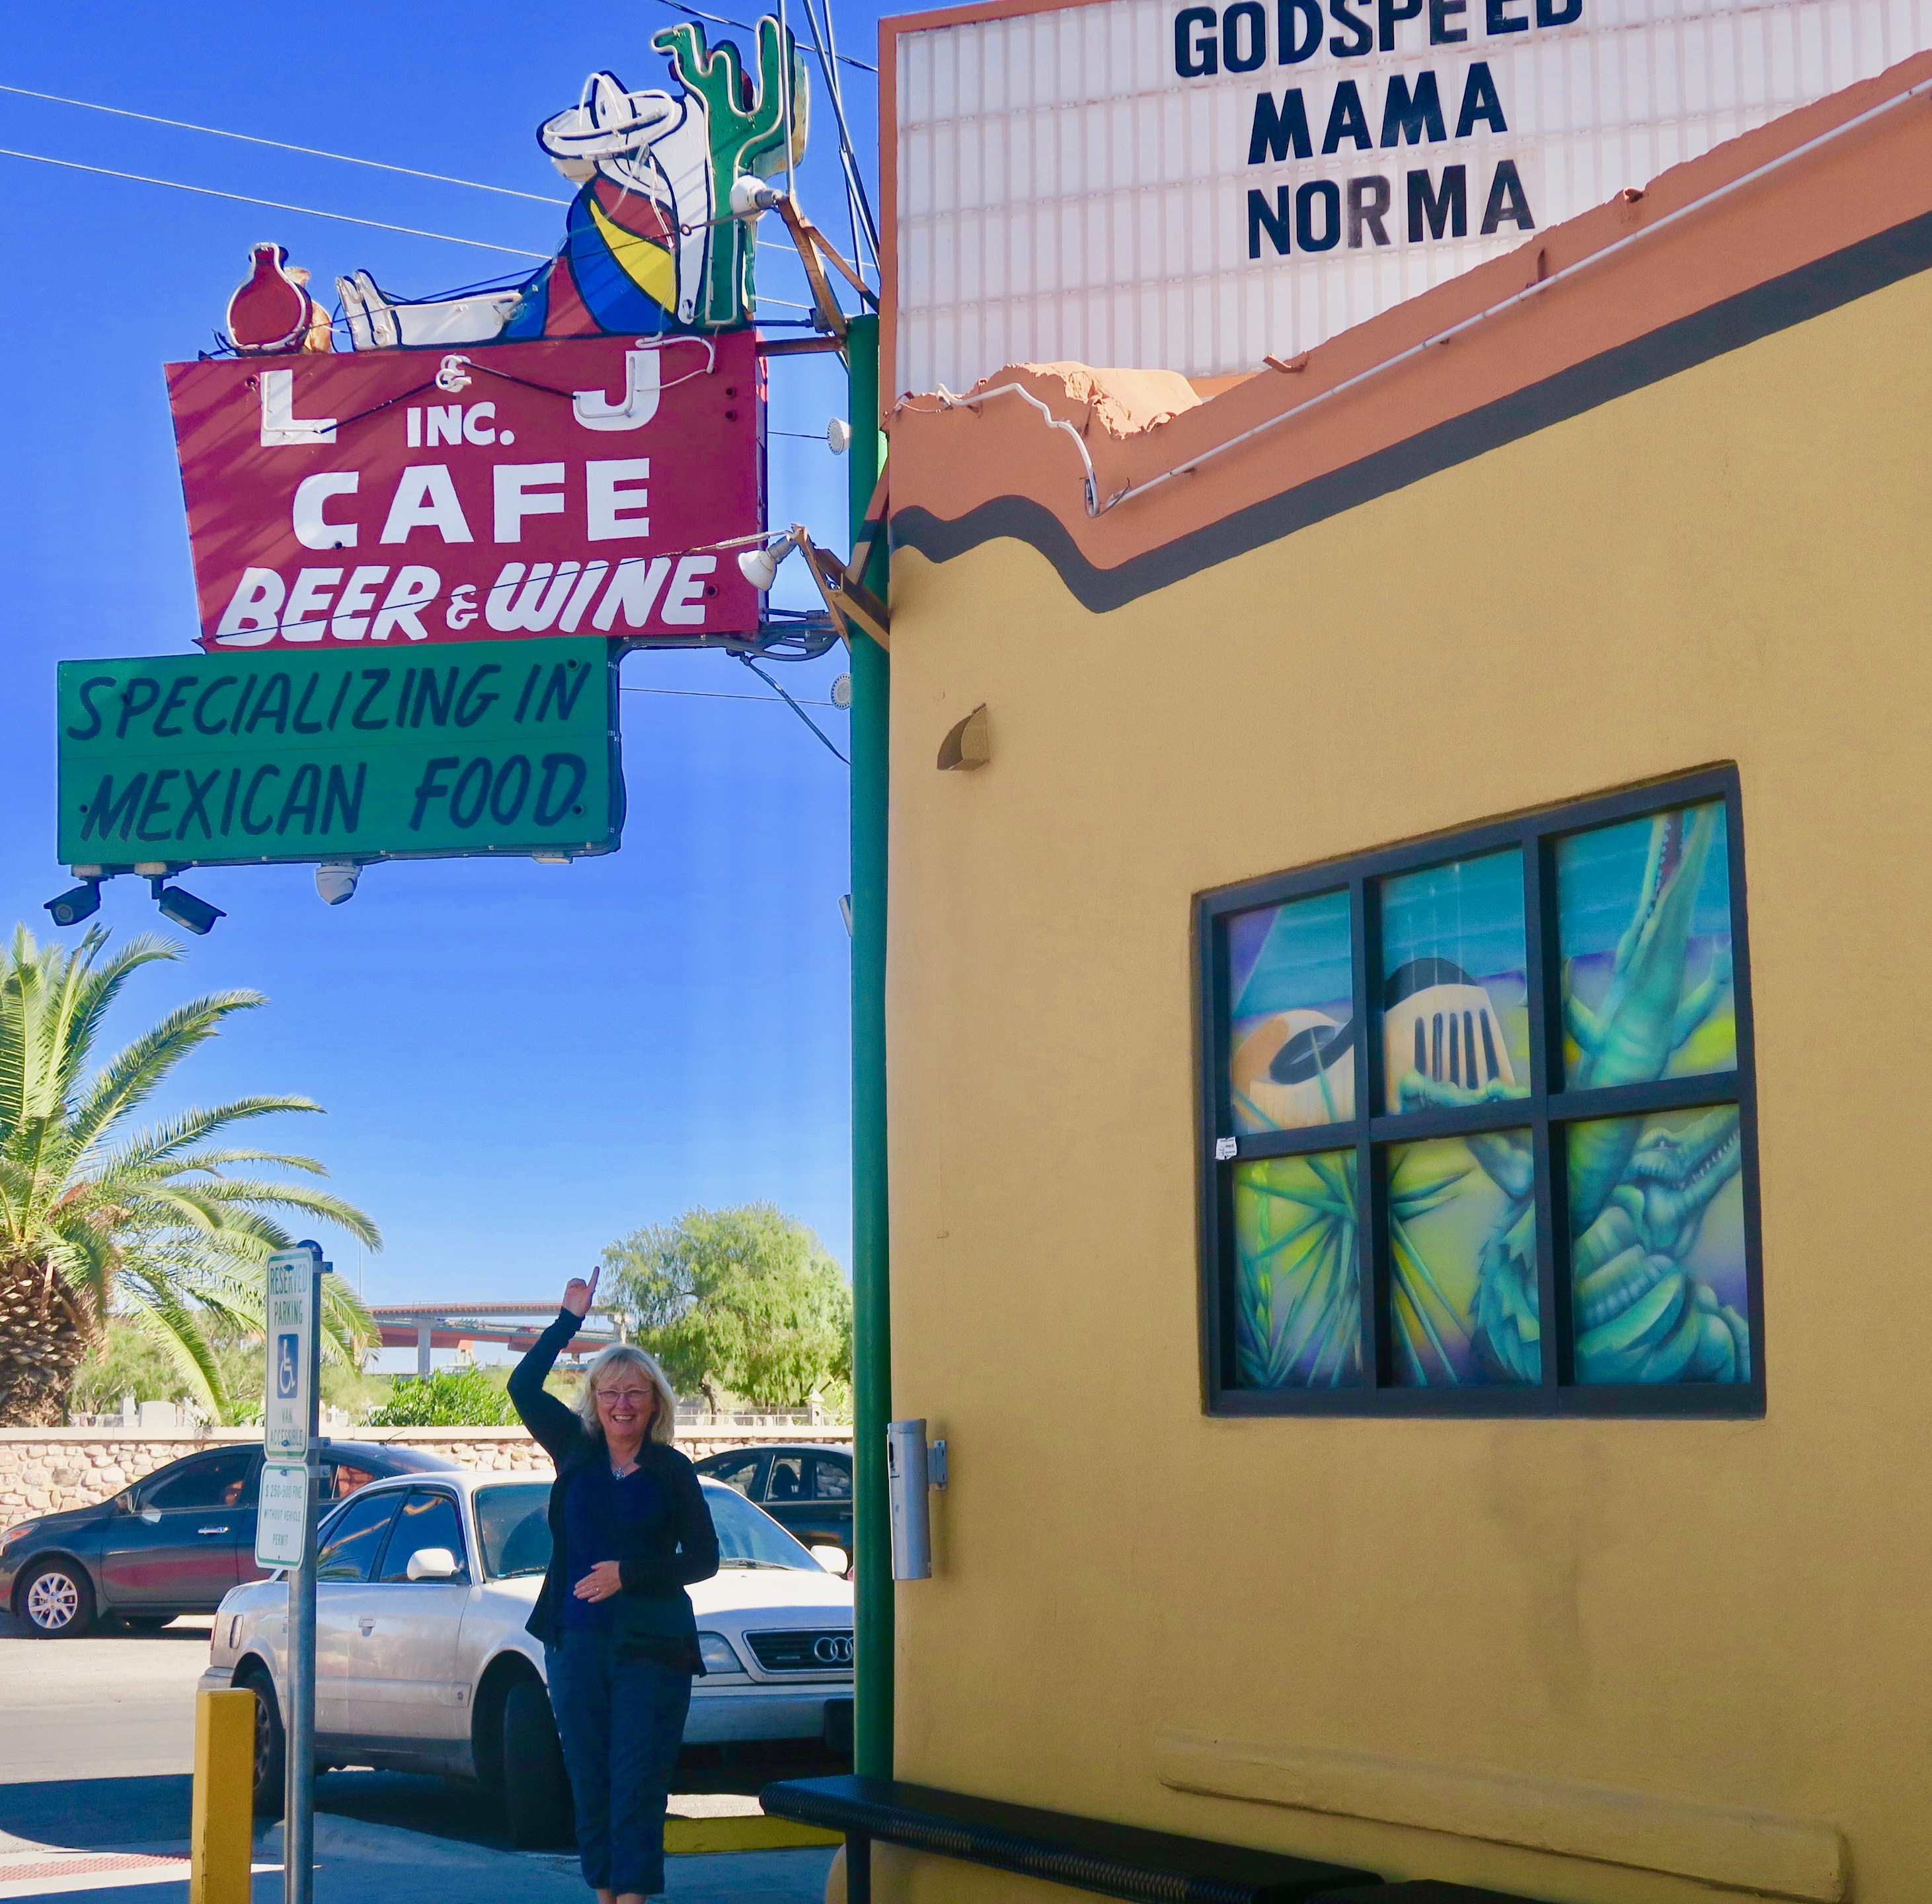 L and J Cafe, El Paso